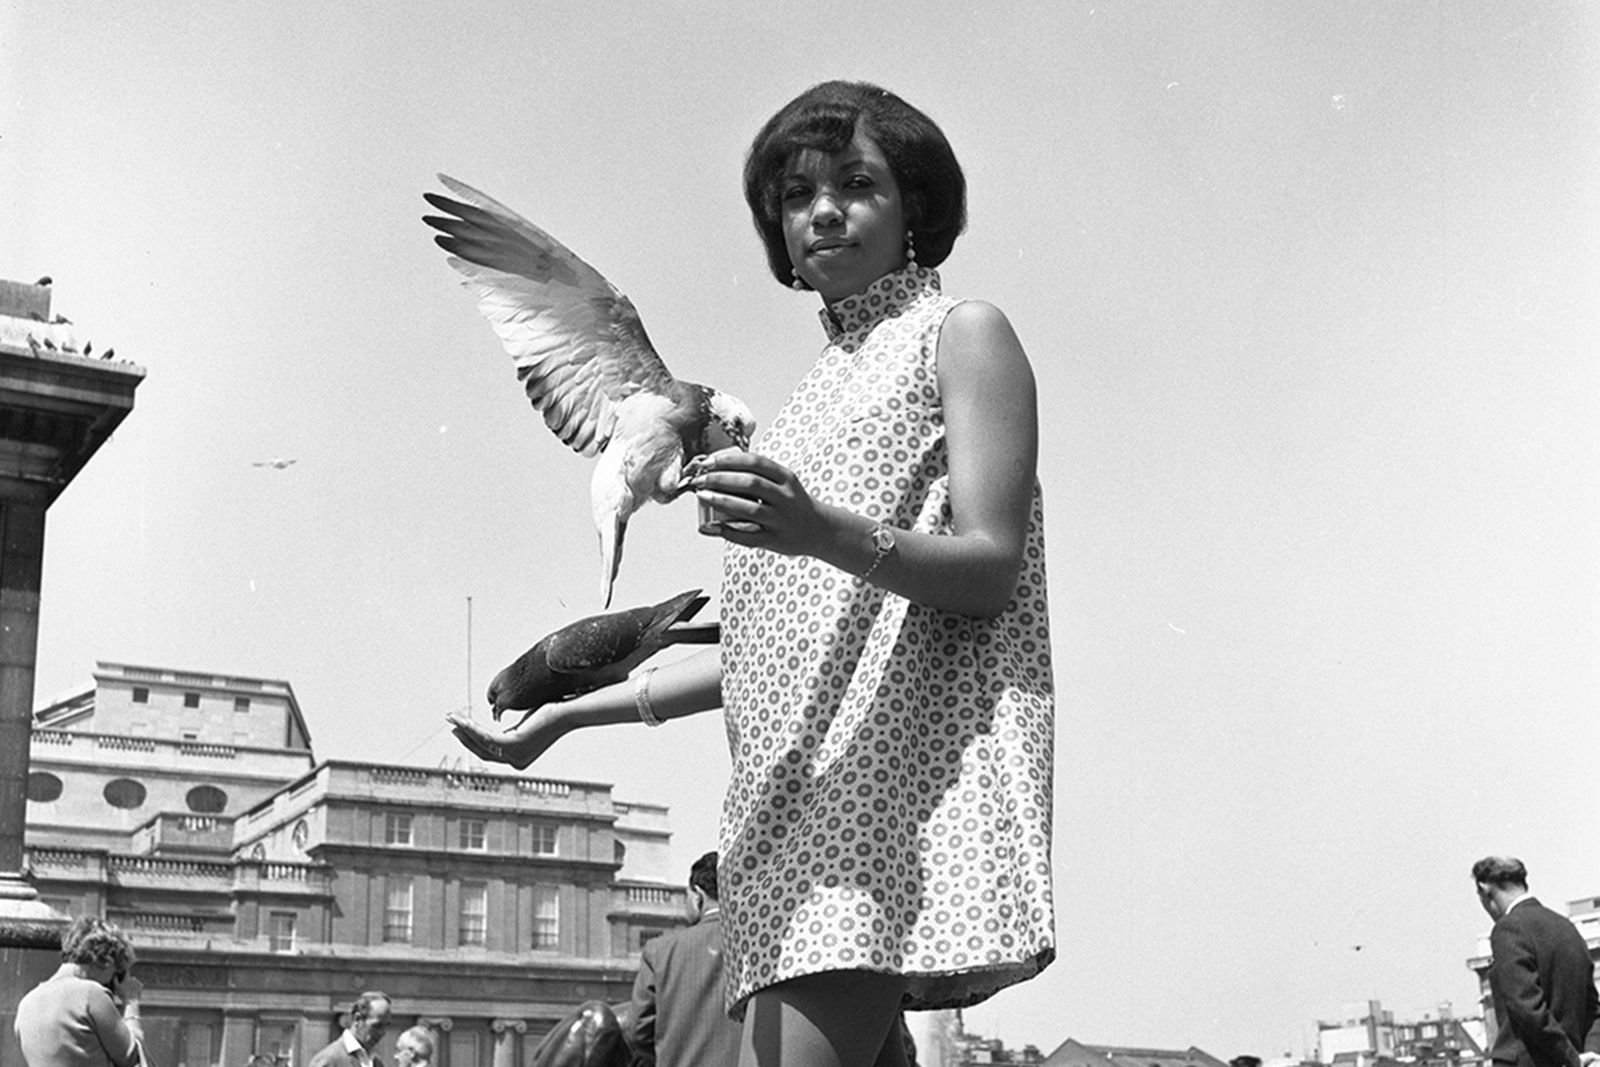 Drum Cover Girl, Erlin Ibreck, at Trafalgar Square, London, 1966. Courtesy Galerie Clémentine de la Féronnière @clementinedelaferonniere